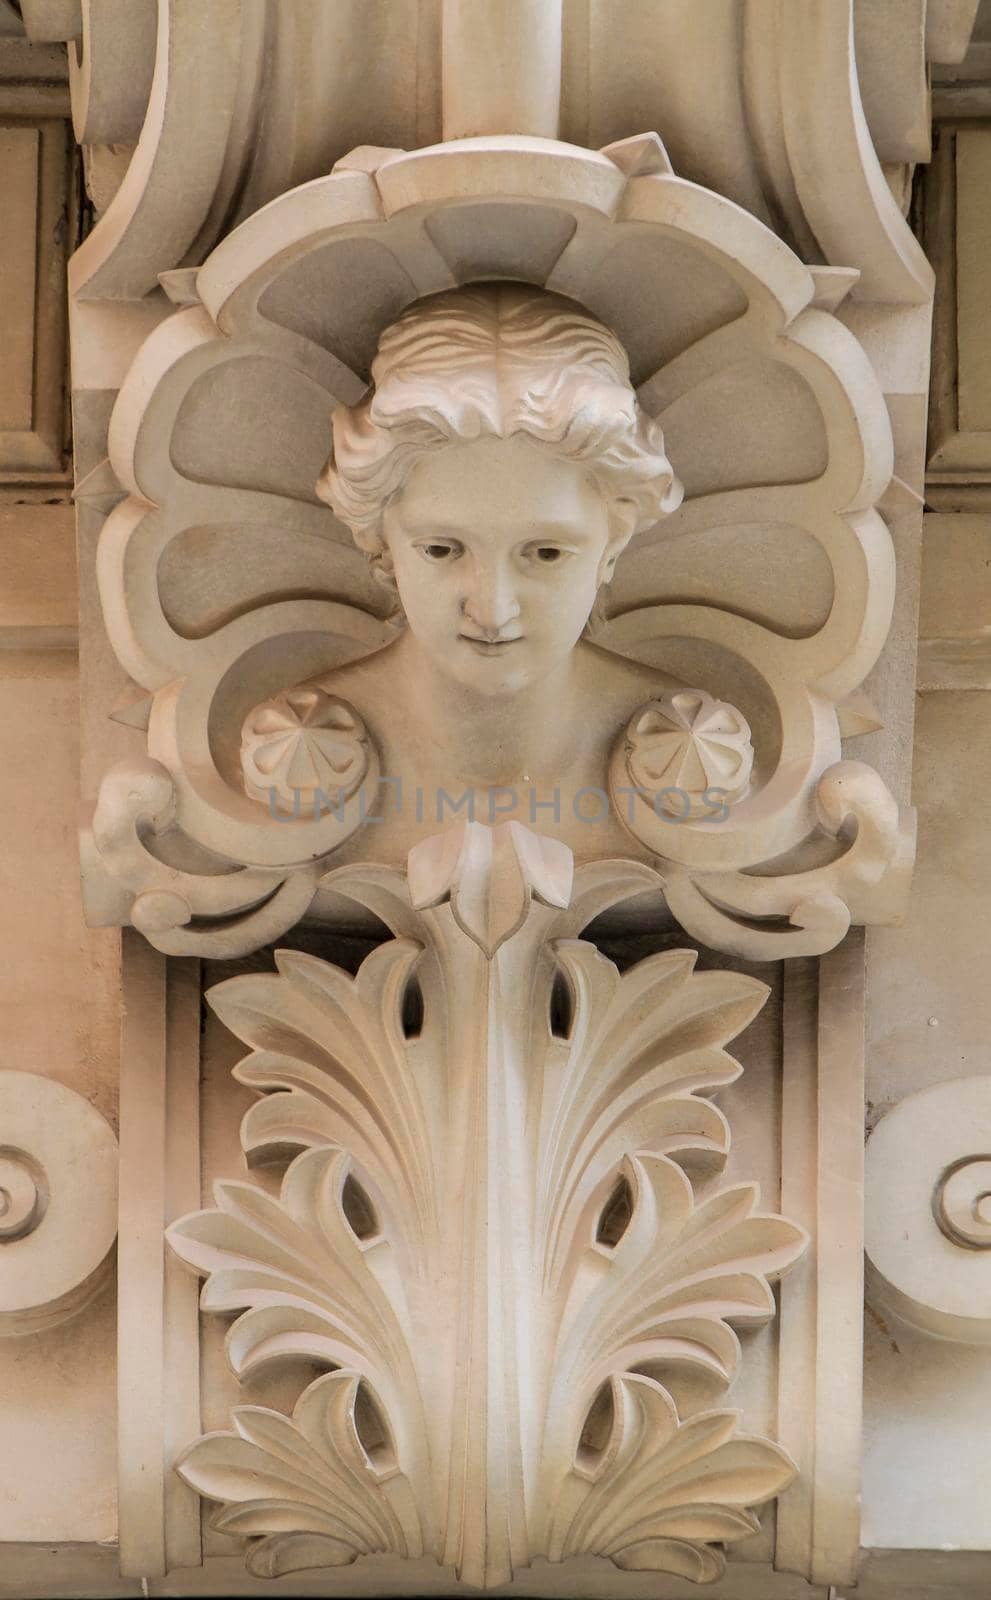 Novelda, Alicante, Spain- September 18, 2021: Carved stone woman face on the facade of the Modernist House Museum in Novelda